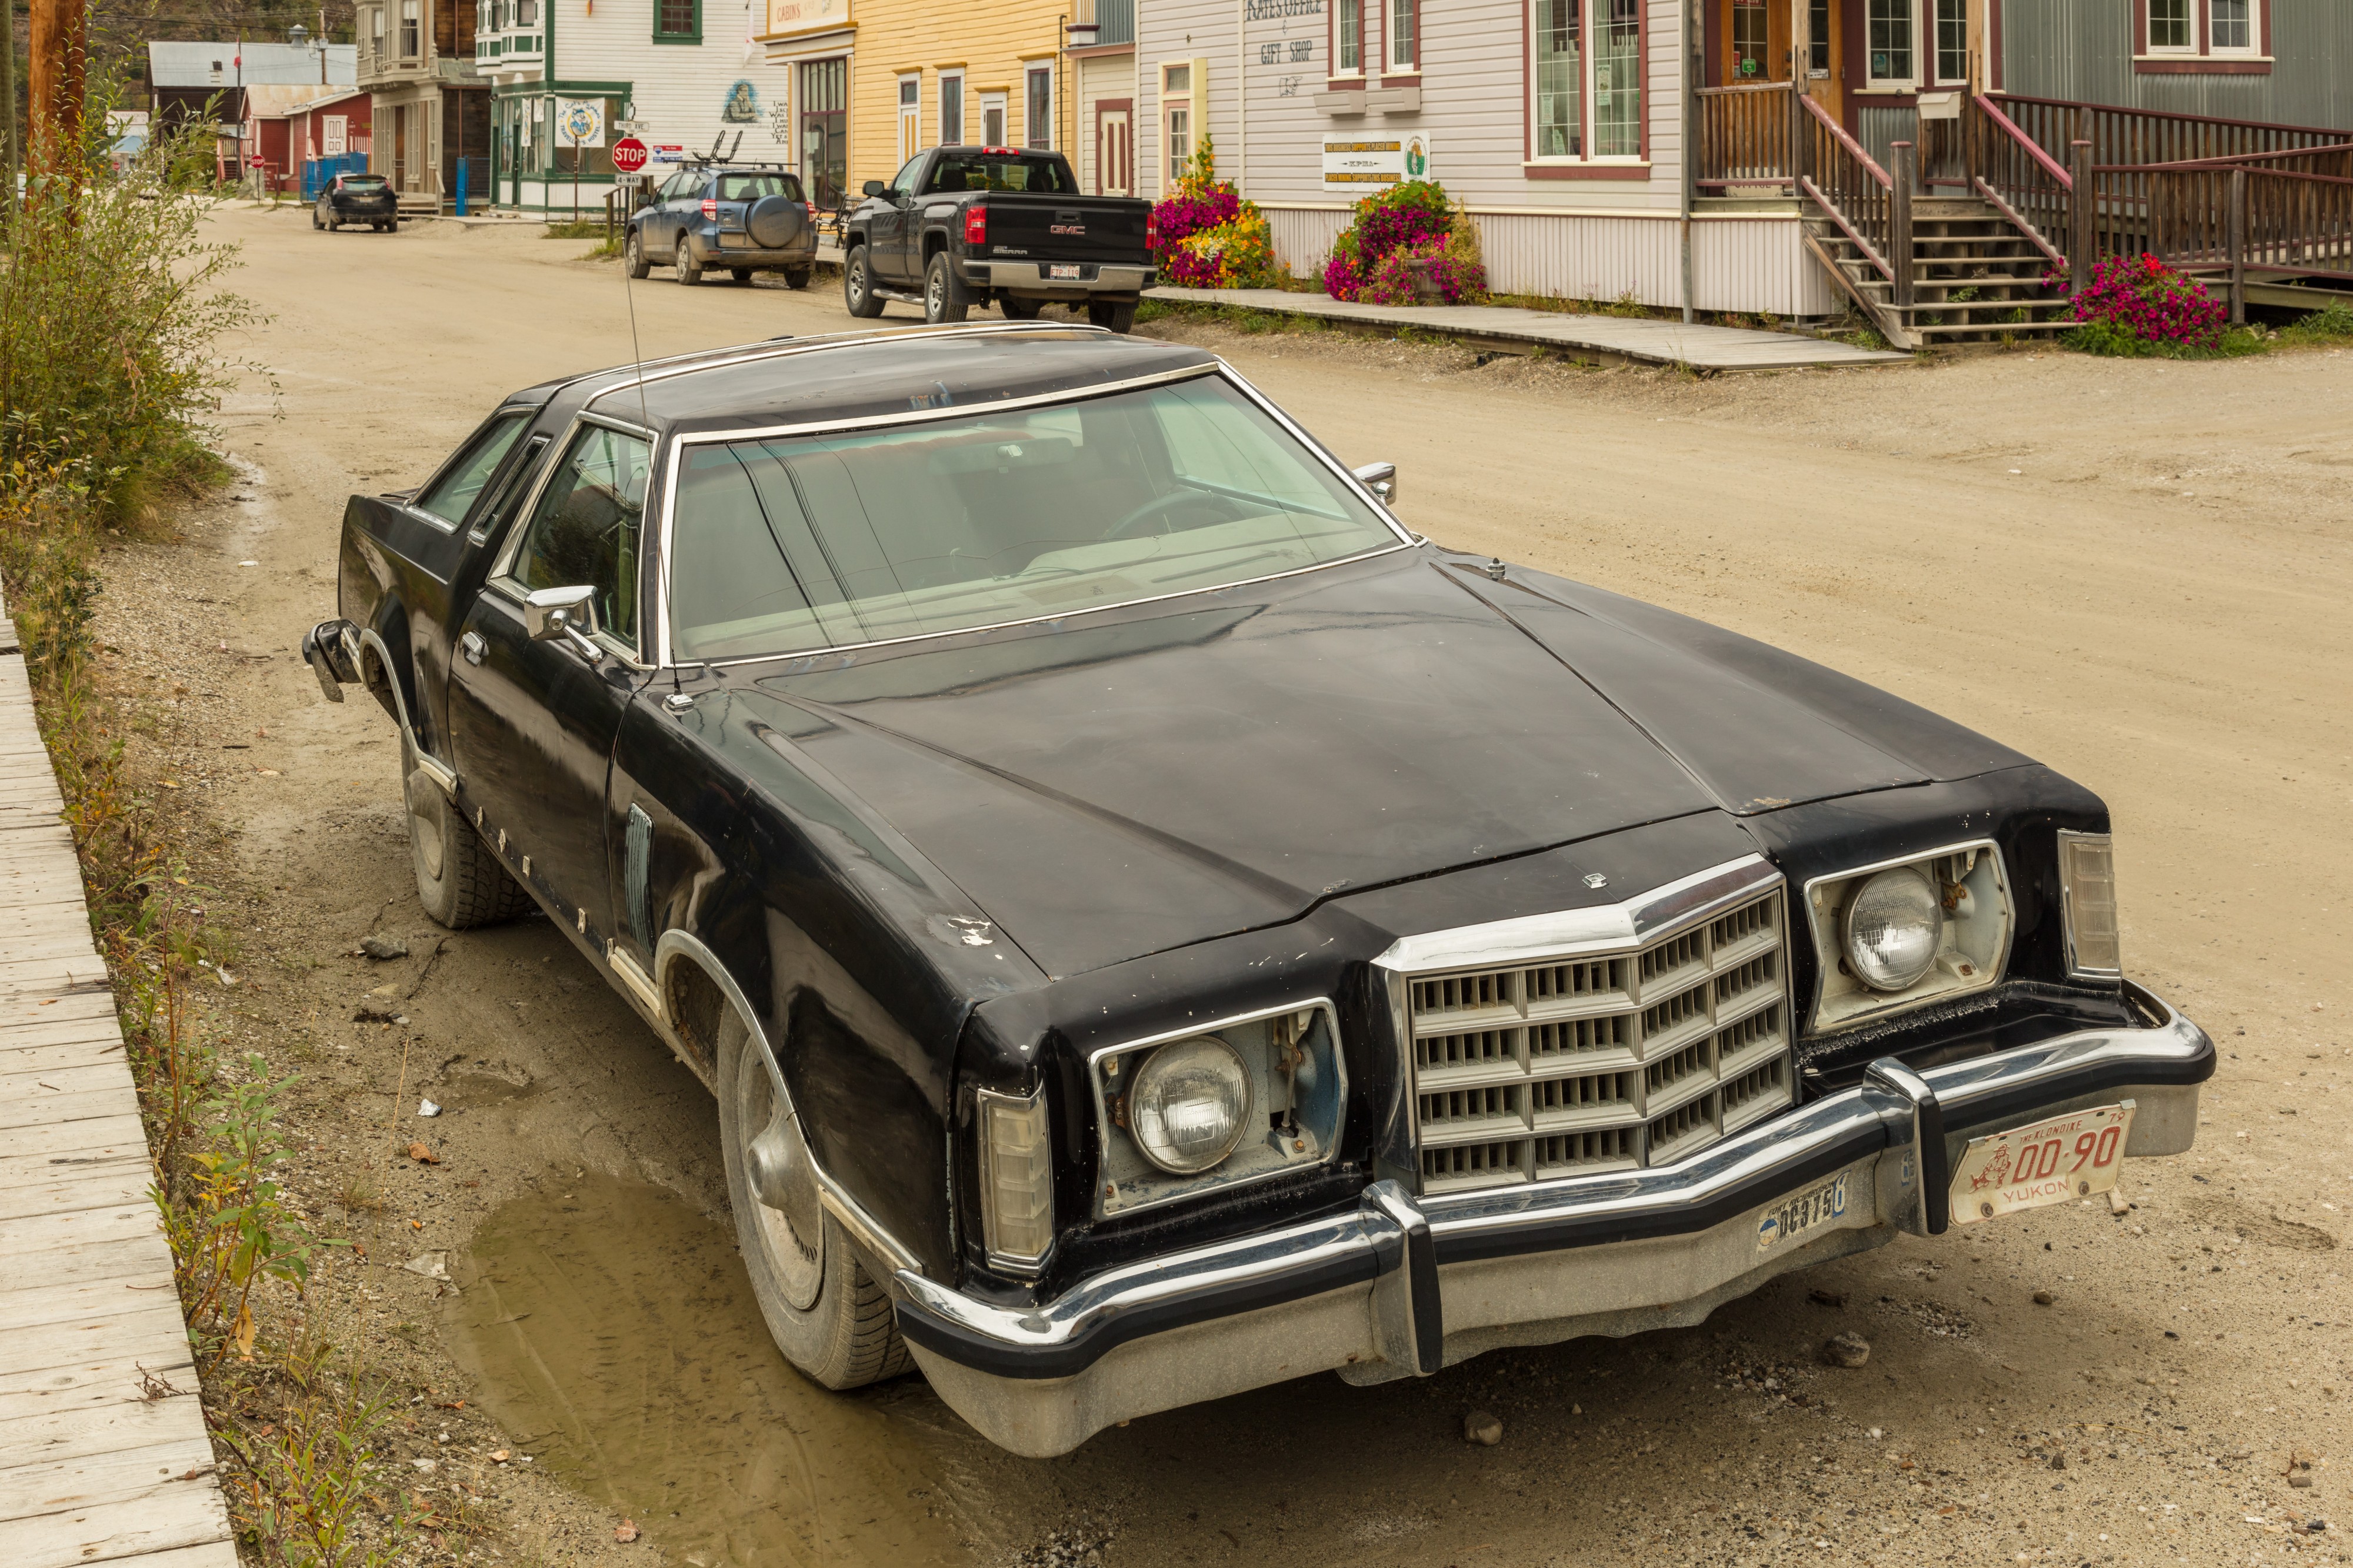 Ford Thunderbird en la Calle King, Dawson City, Yukón, Canadá, 2017-08-27, DD 36